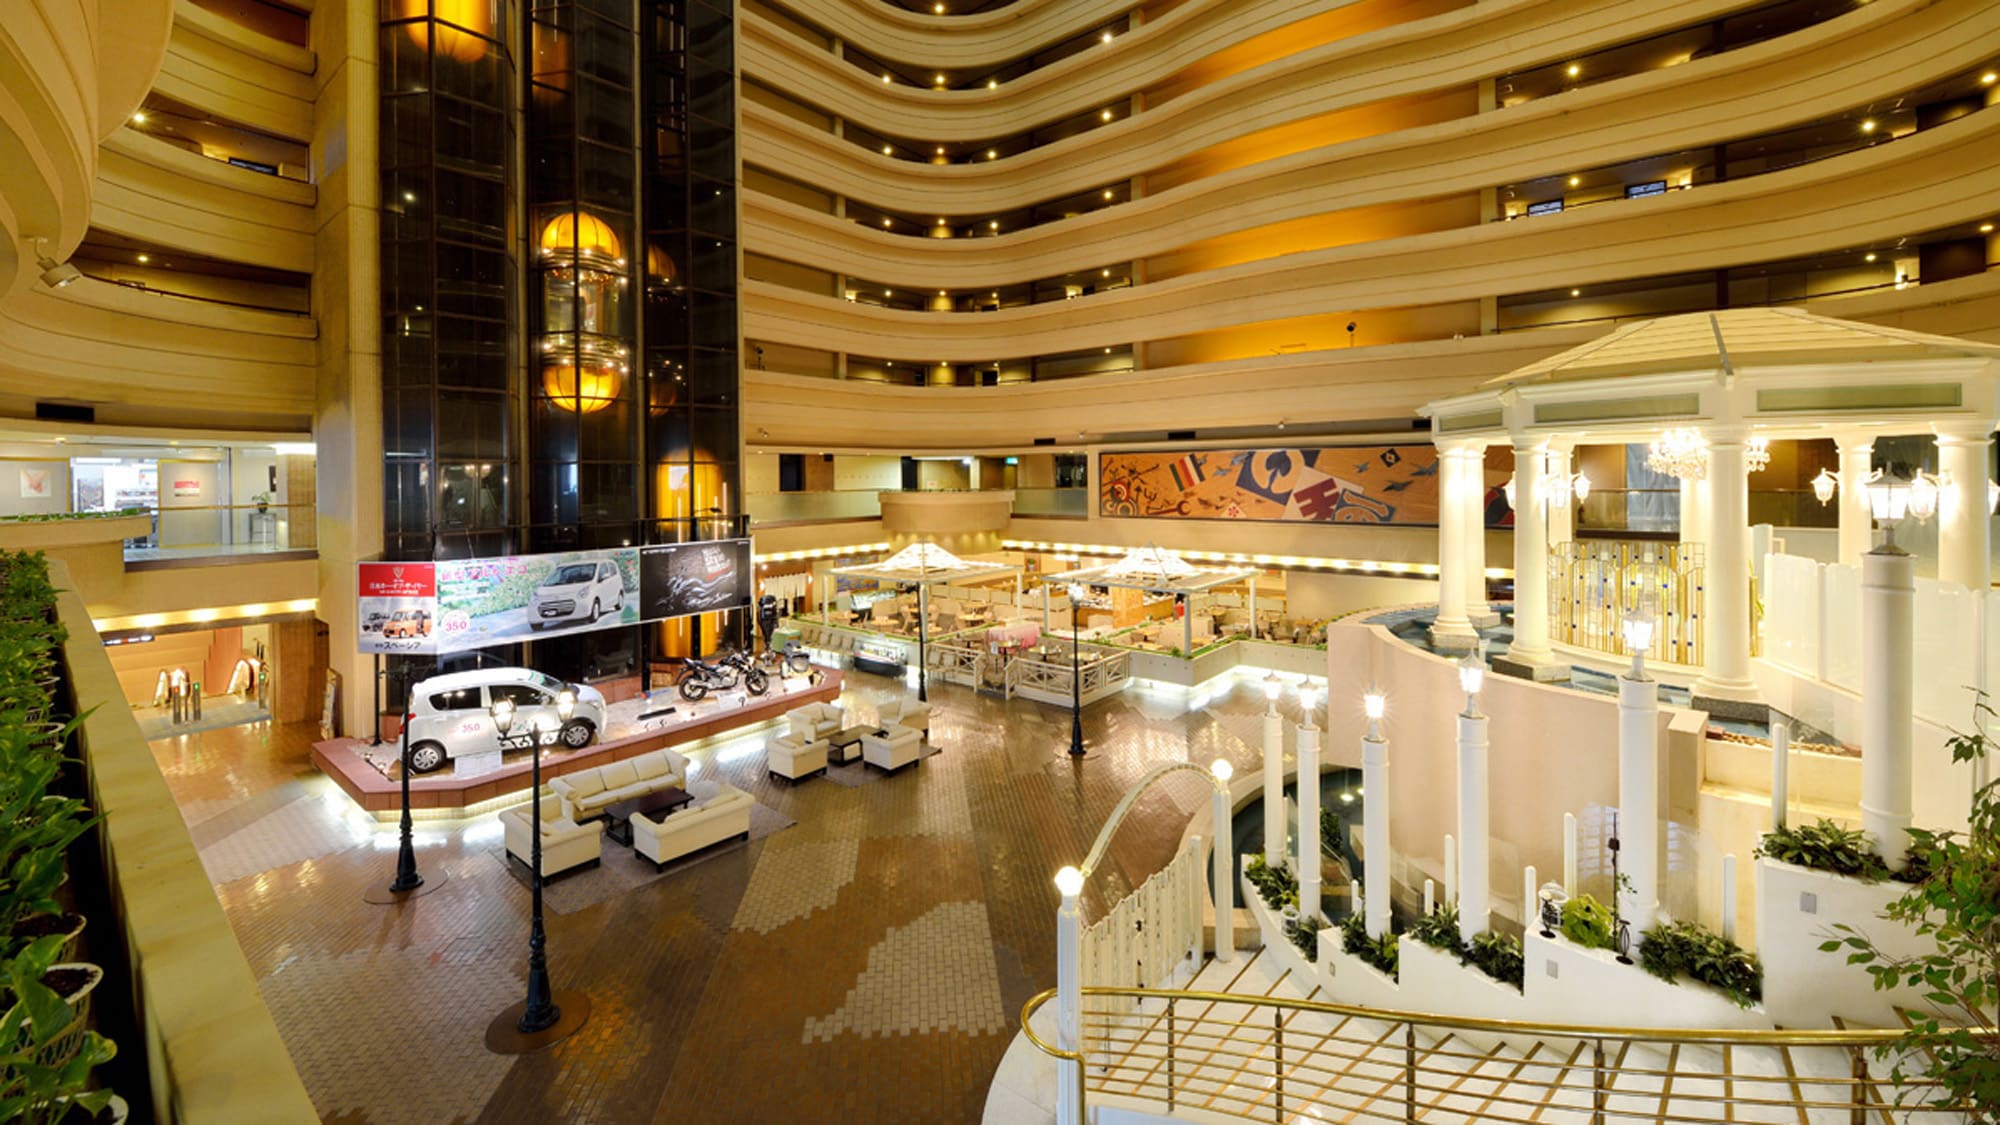 ■ Atrium lobby: It is an atrium lobby with a colonnade up to the 12th floor.